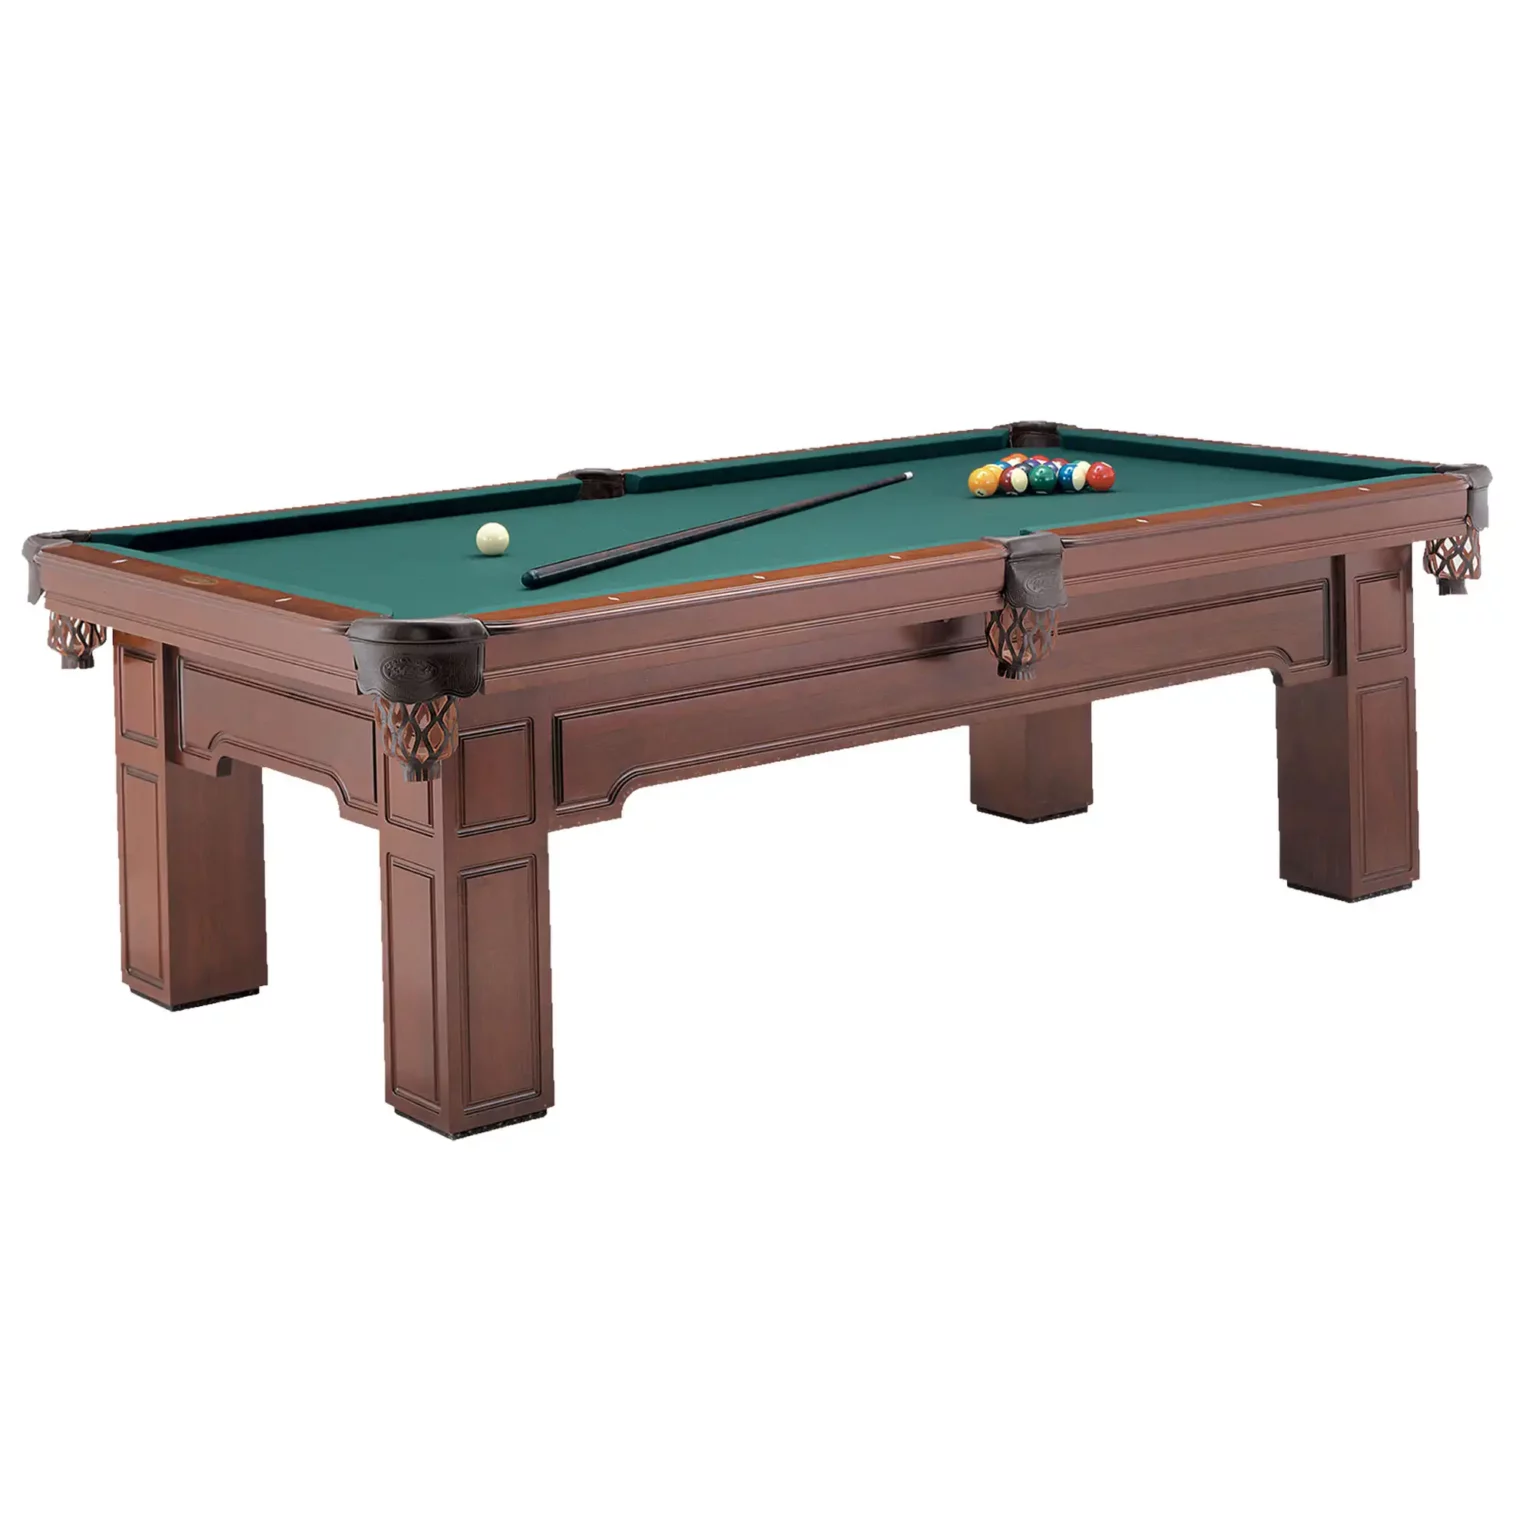 Olhausen Huntington pool table